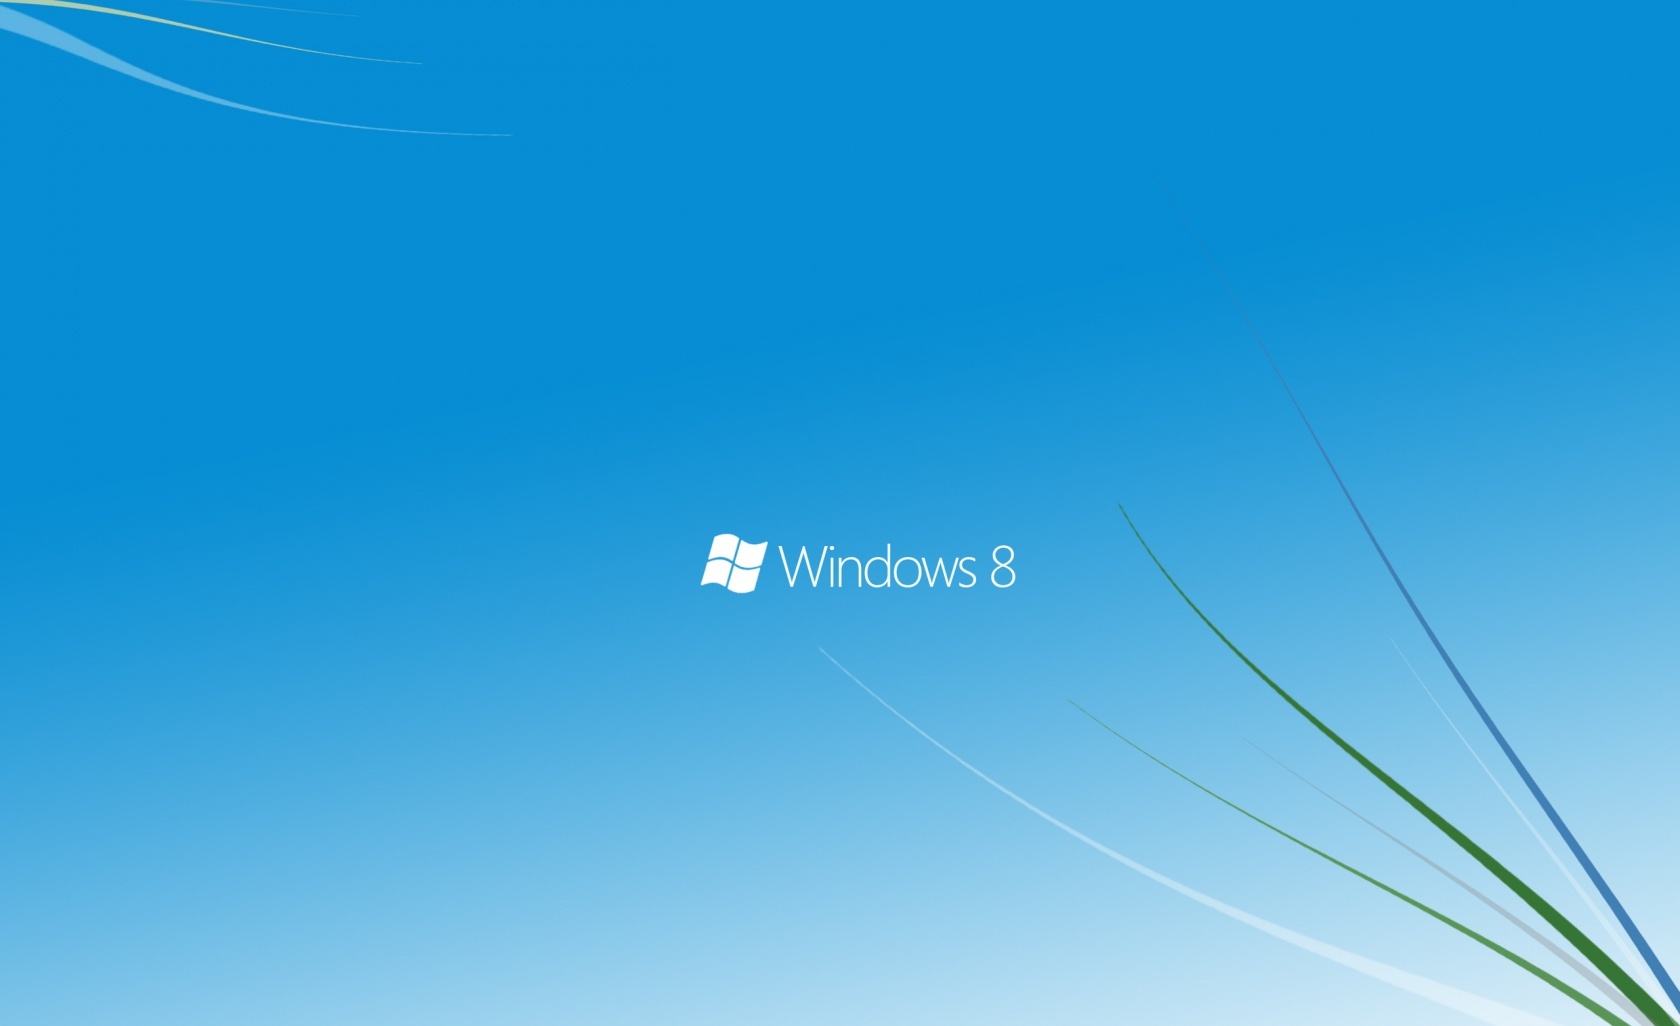 Sfondi Natale Windows 8.Windows 8 Sfondi Full Hd Gratis